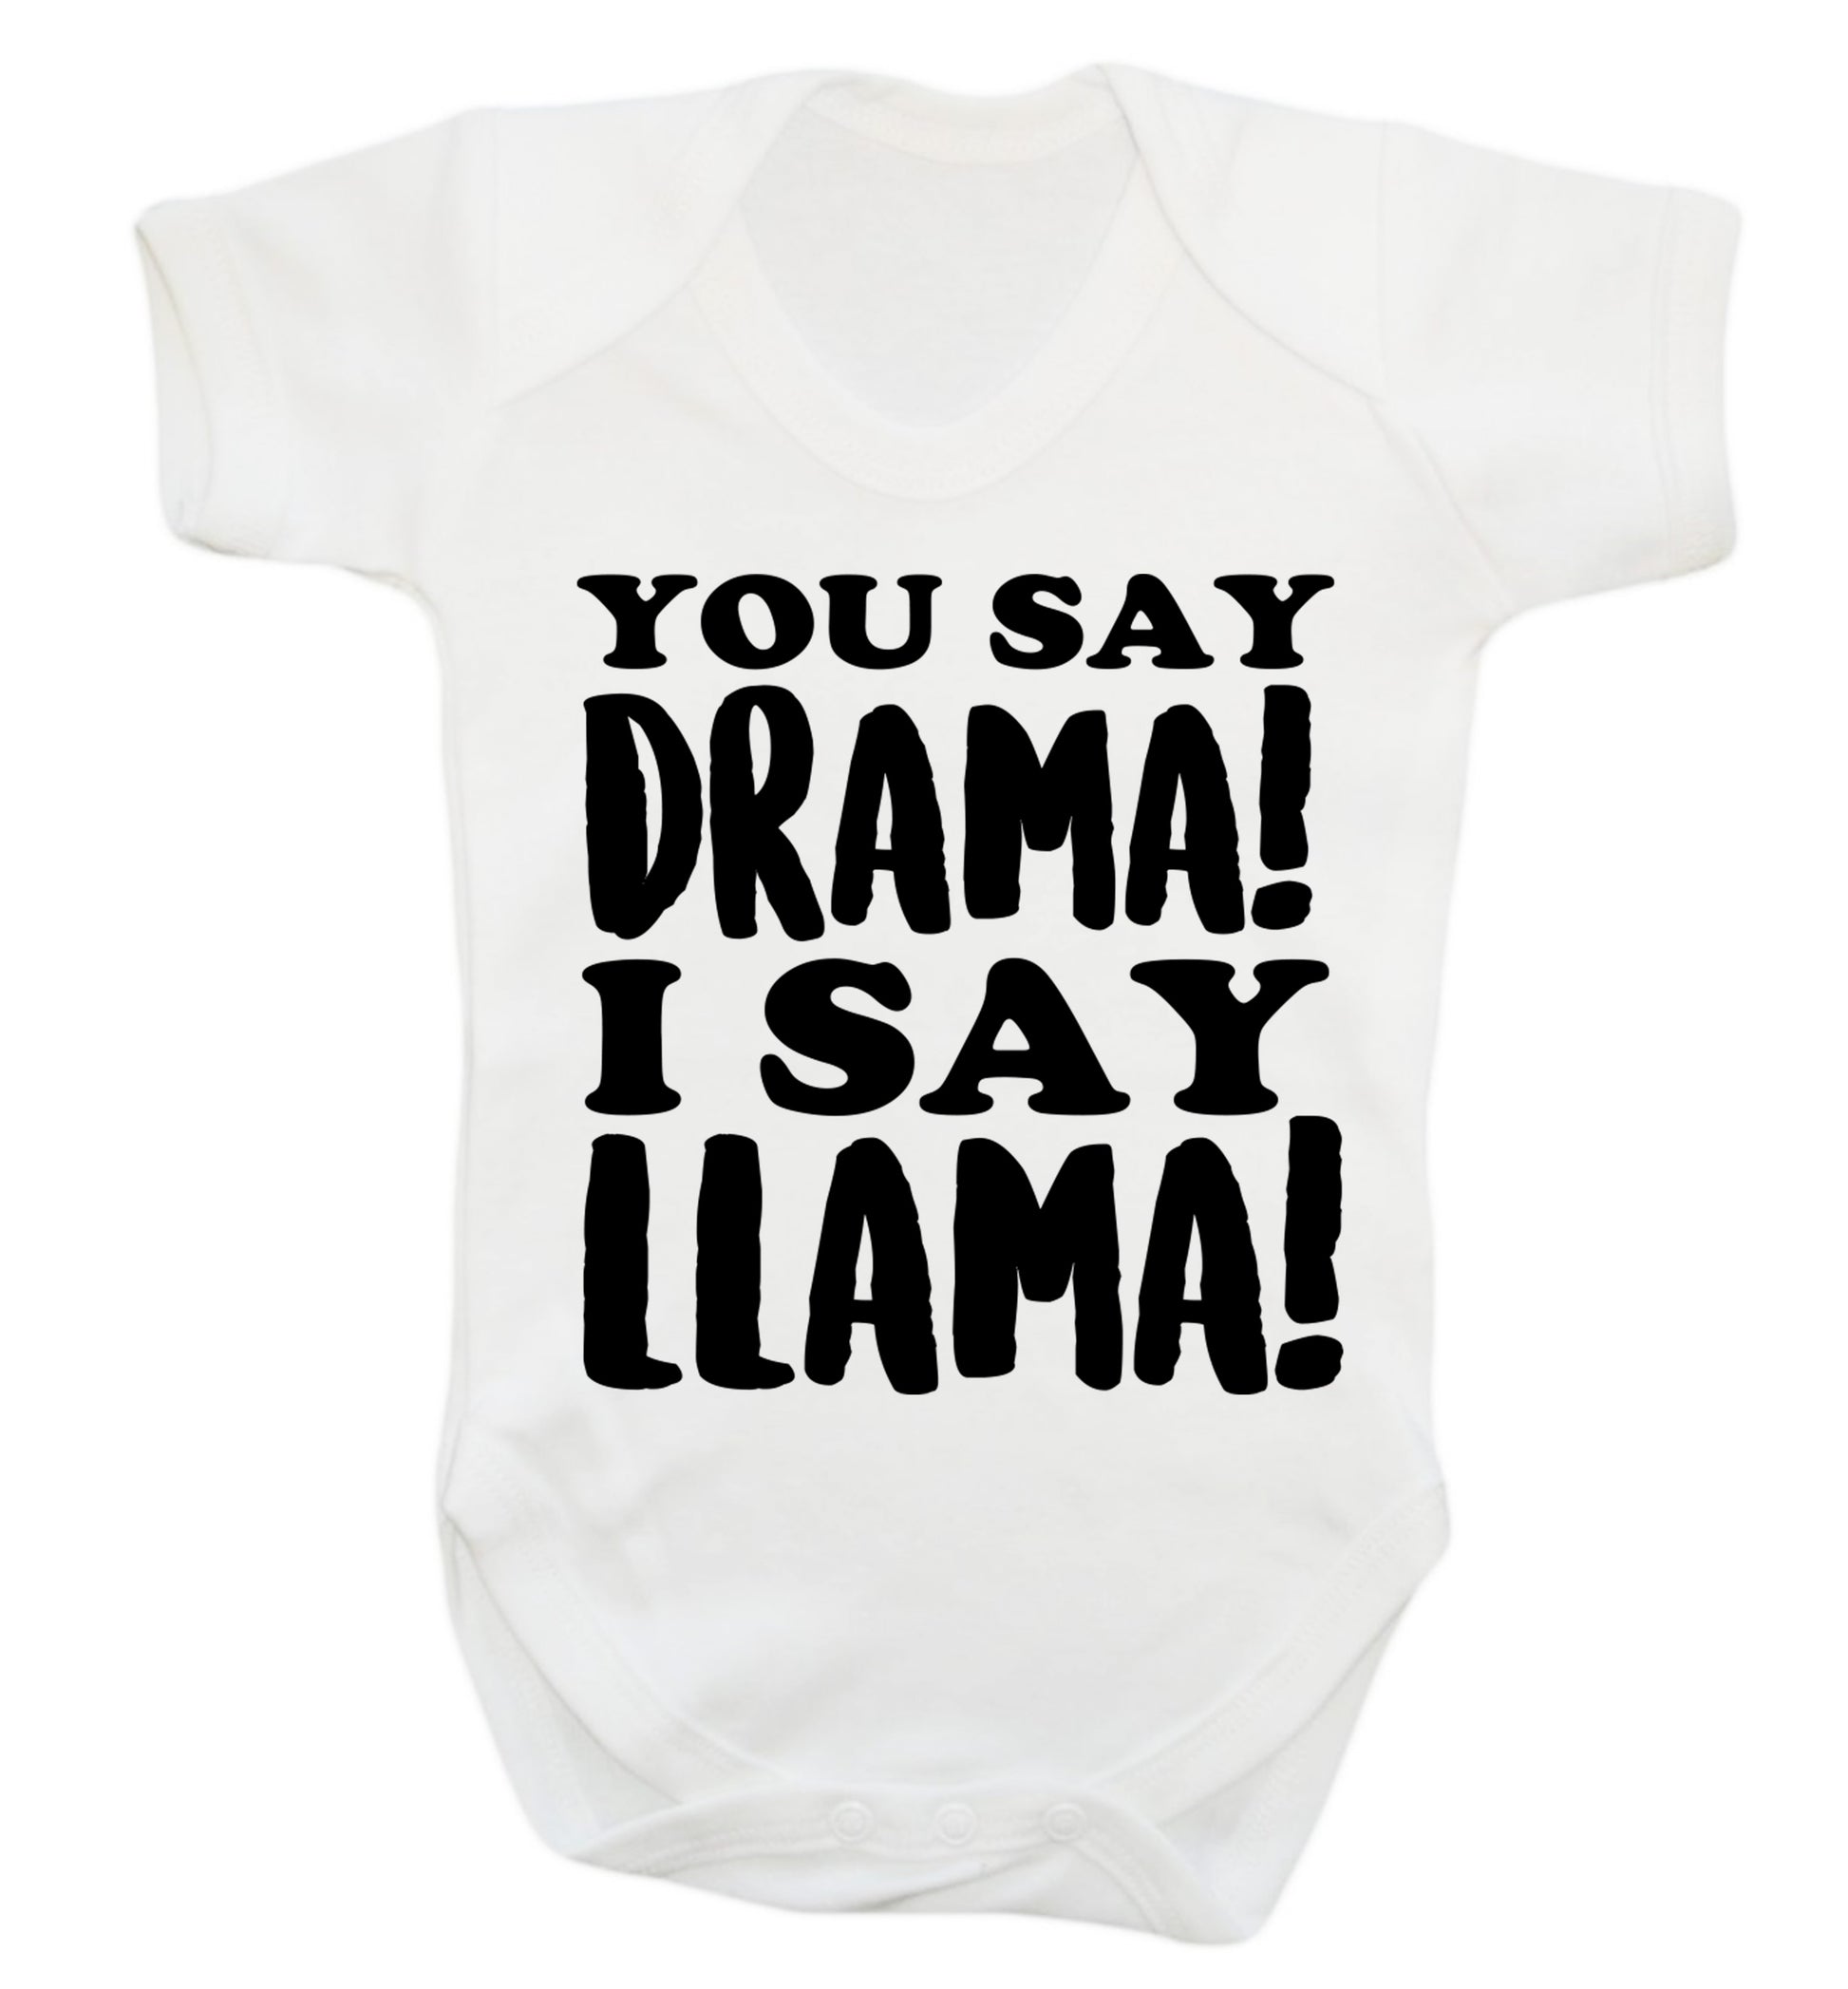 You say drama I say llama! Baby Vest white 18-24 months